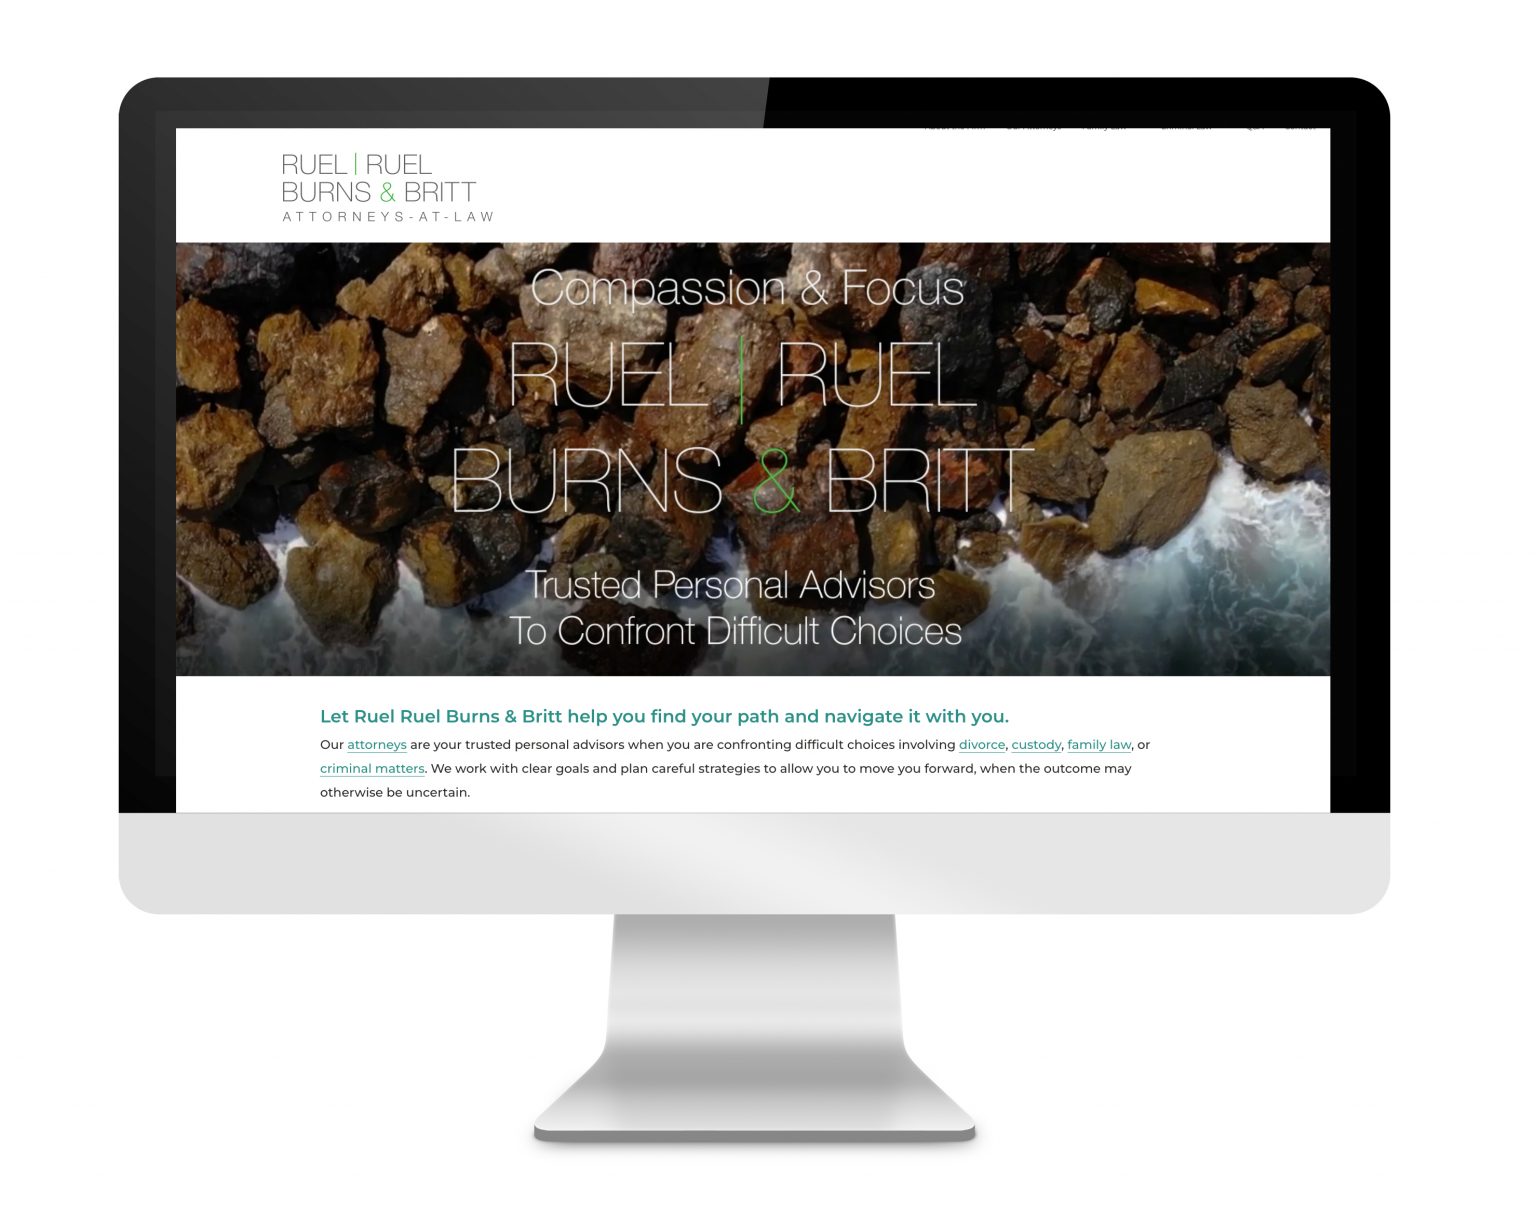 Ruel Ruel Burns Britt & Feldman website designed by DLS Design